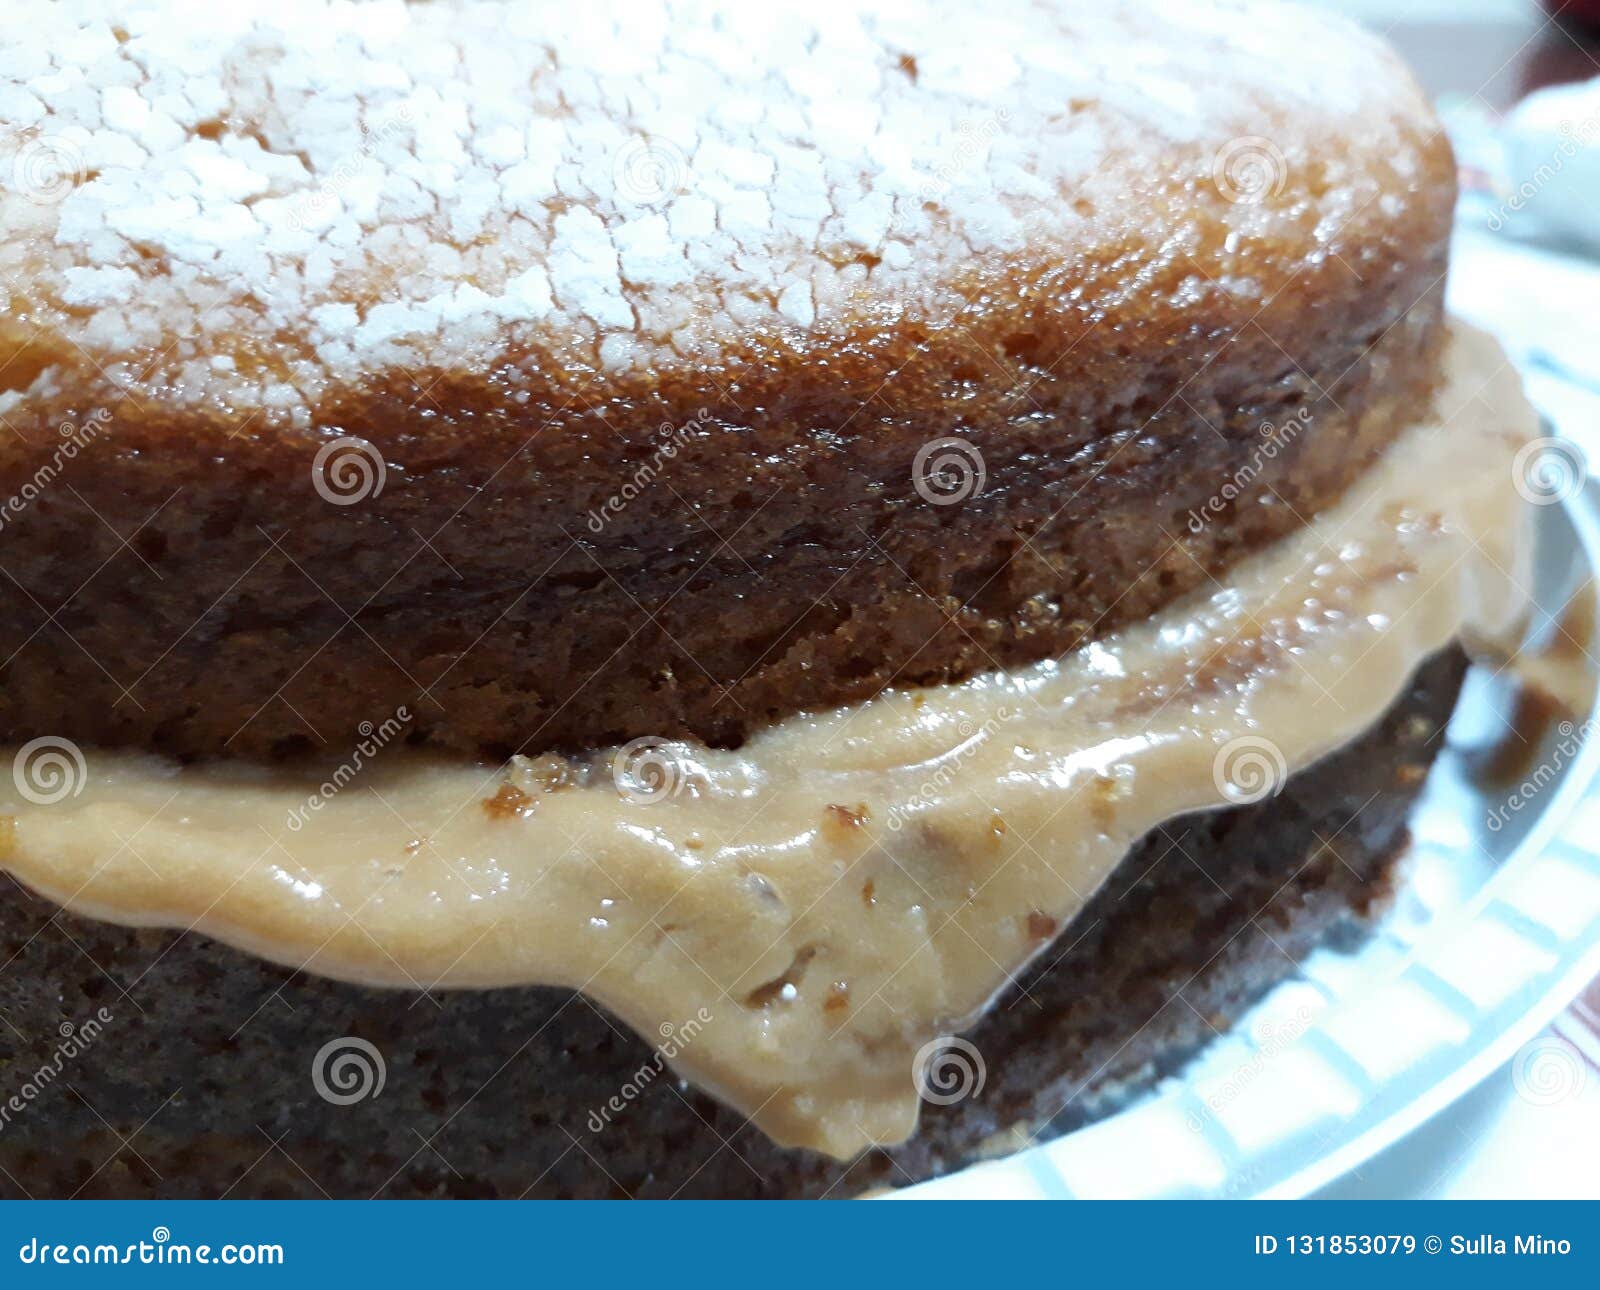 cake with dulce de leche